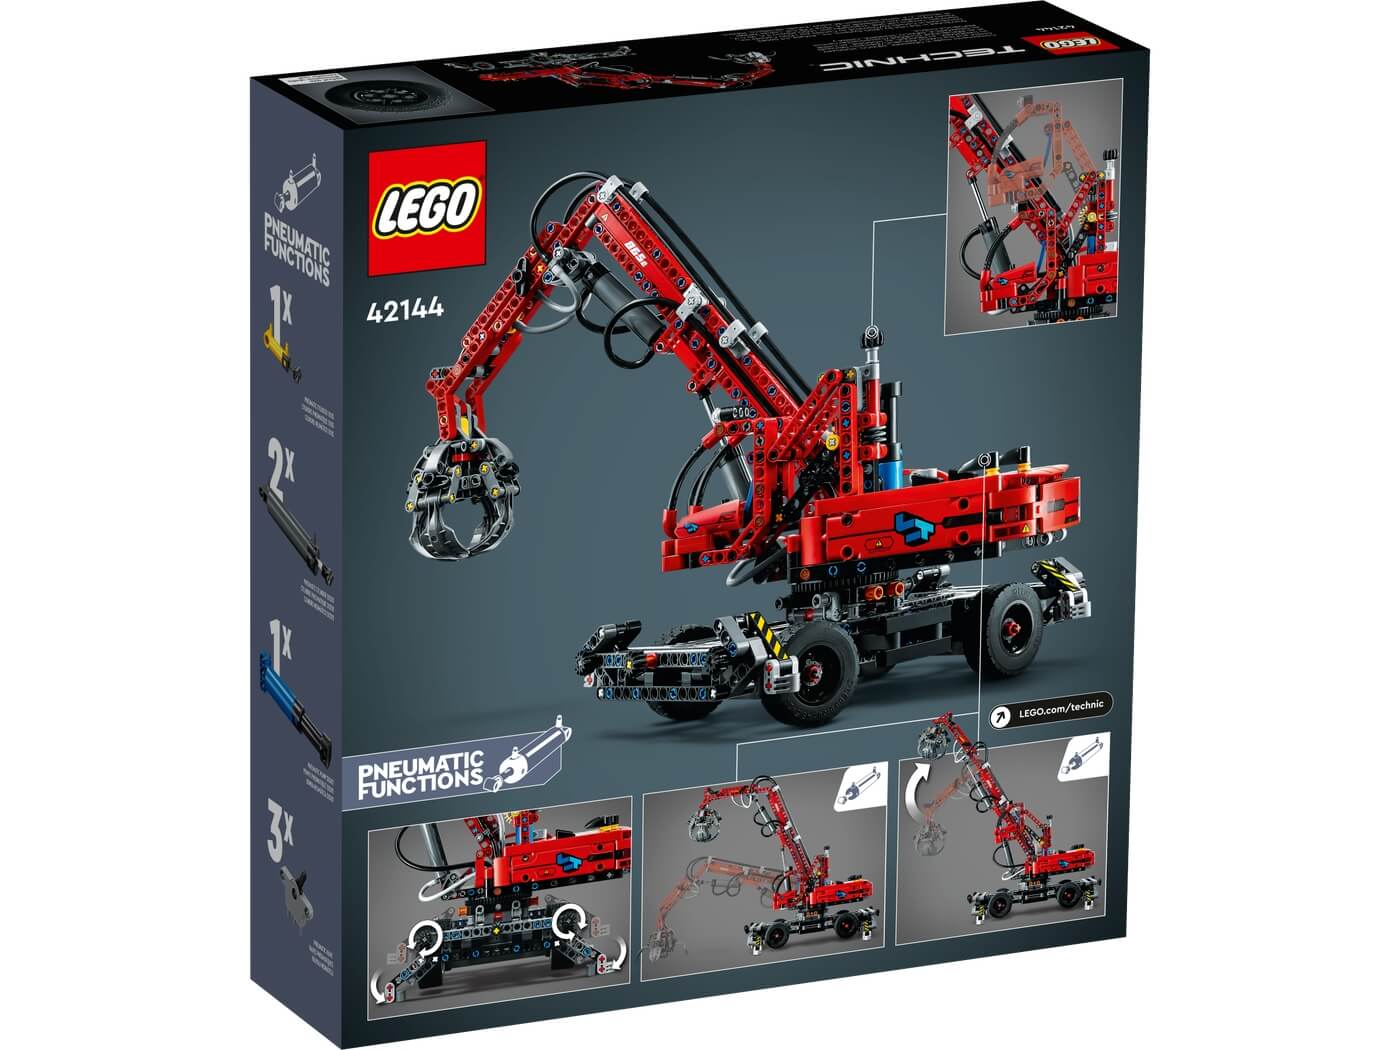 Manipuladora de Materiales ( Lego 42144 ) imagen g